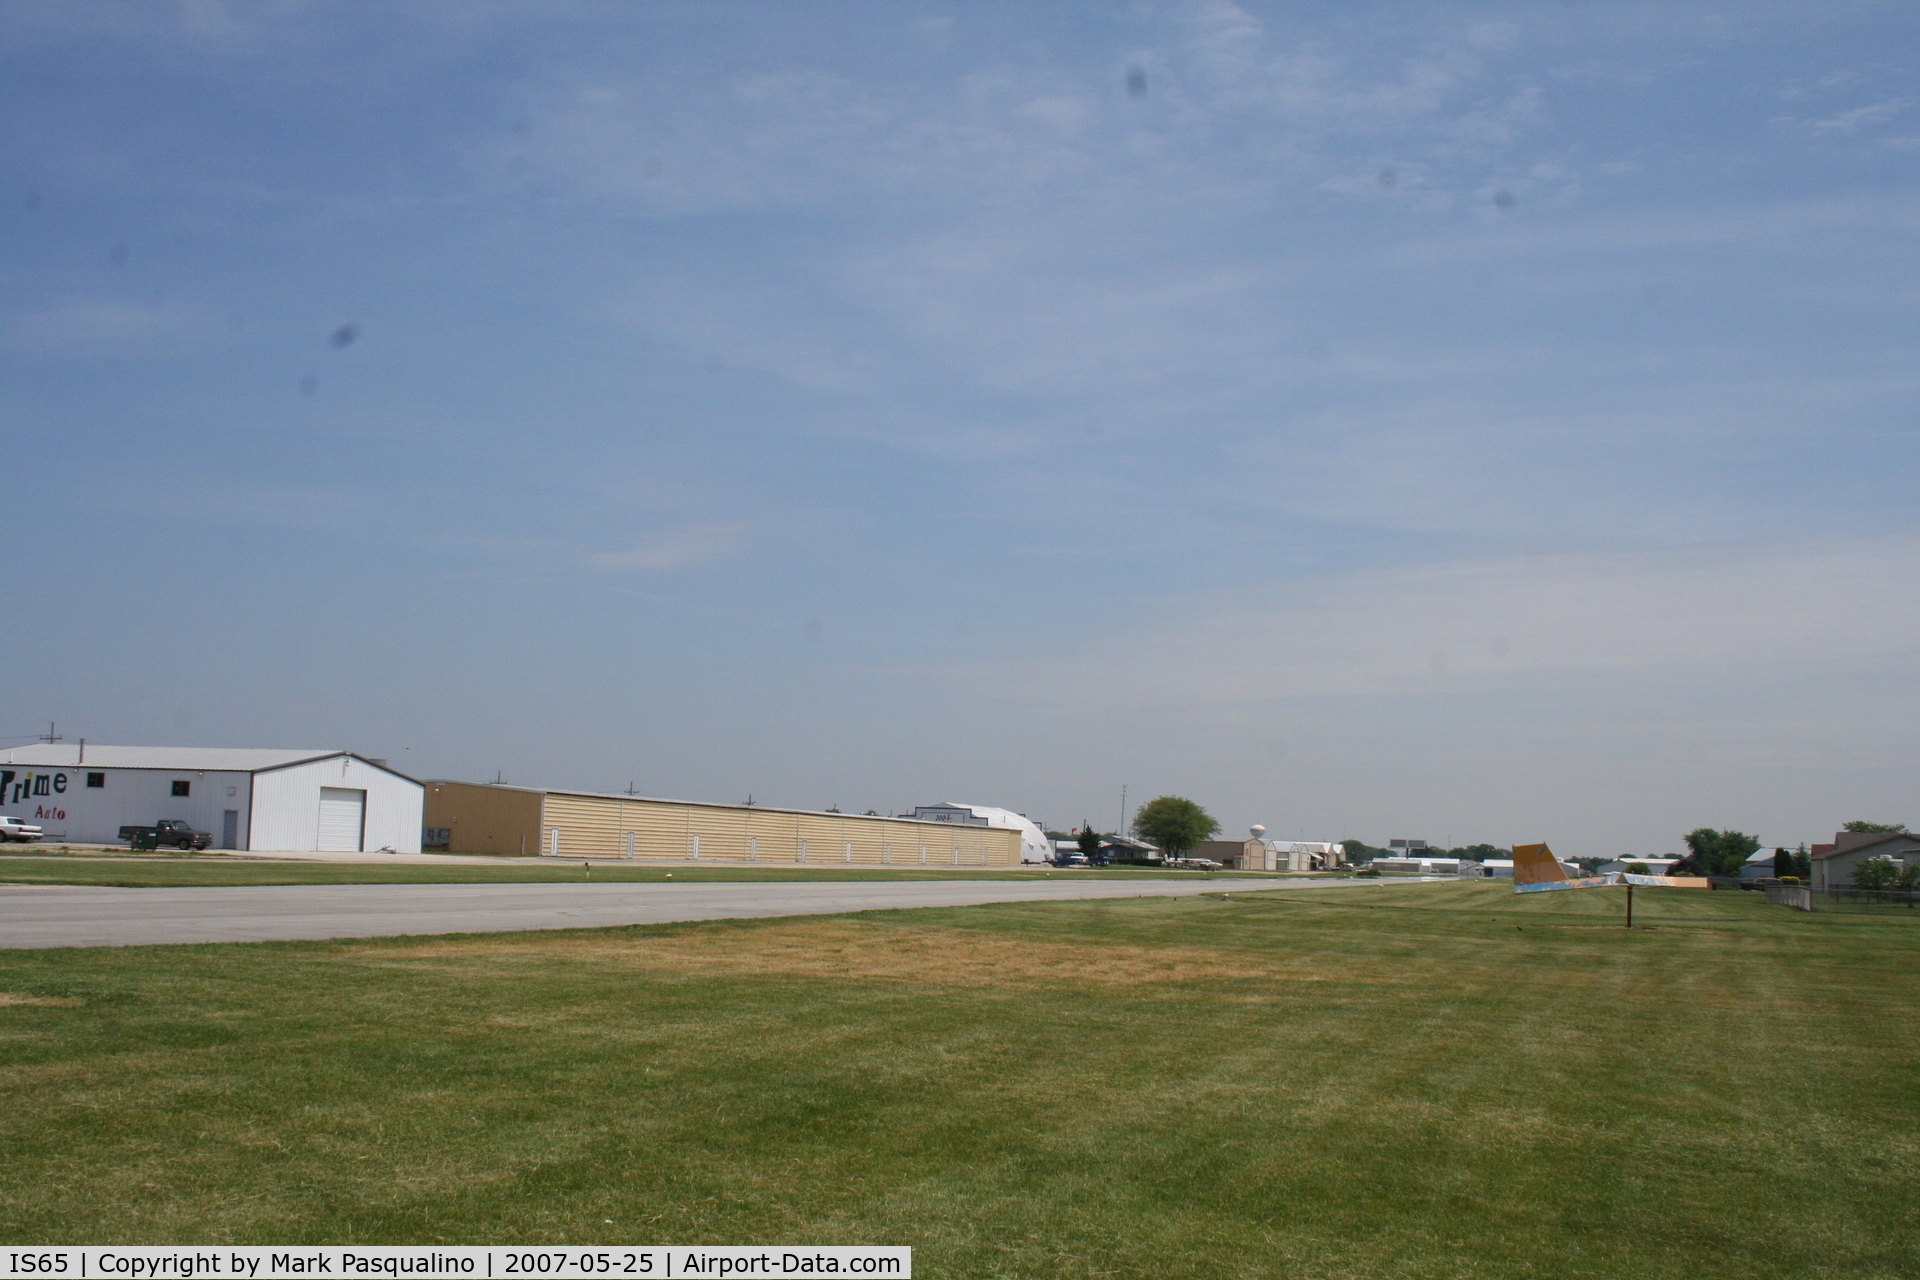 Woodlake Landing Airport (IS65) - Sandwich, IL